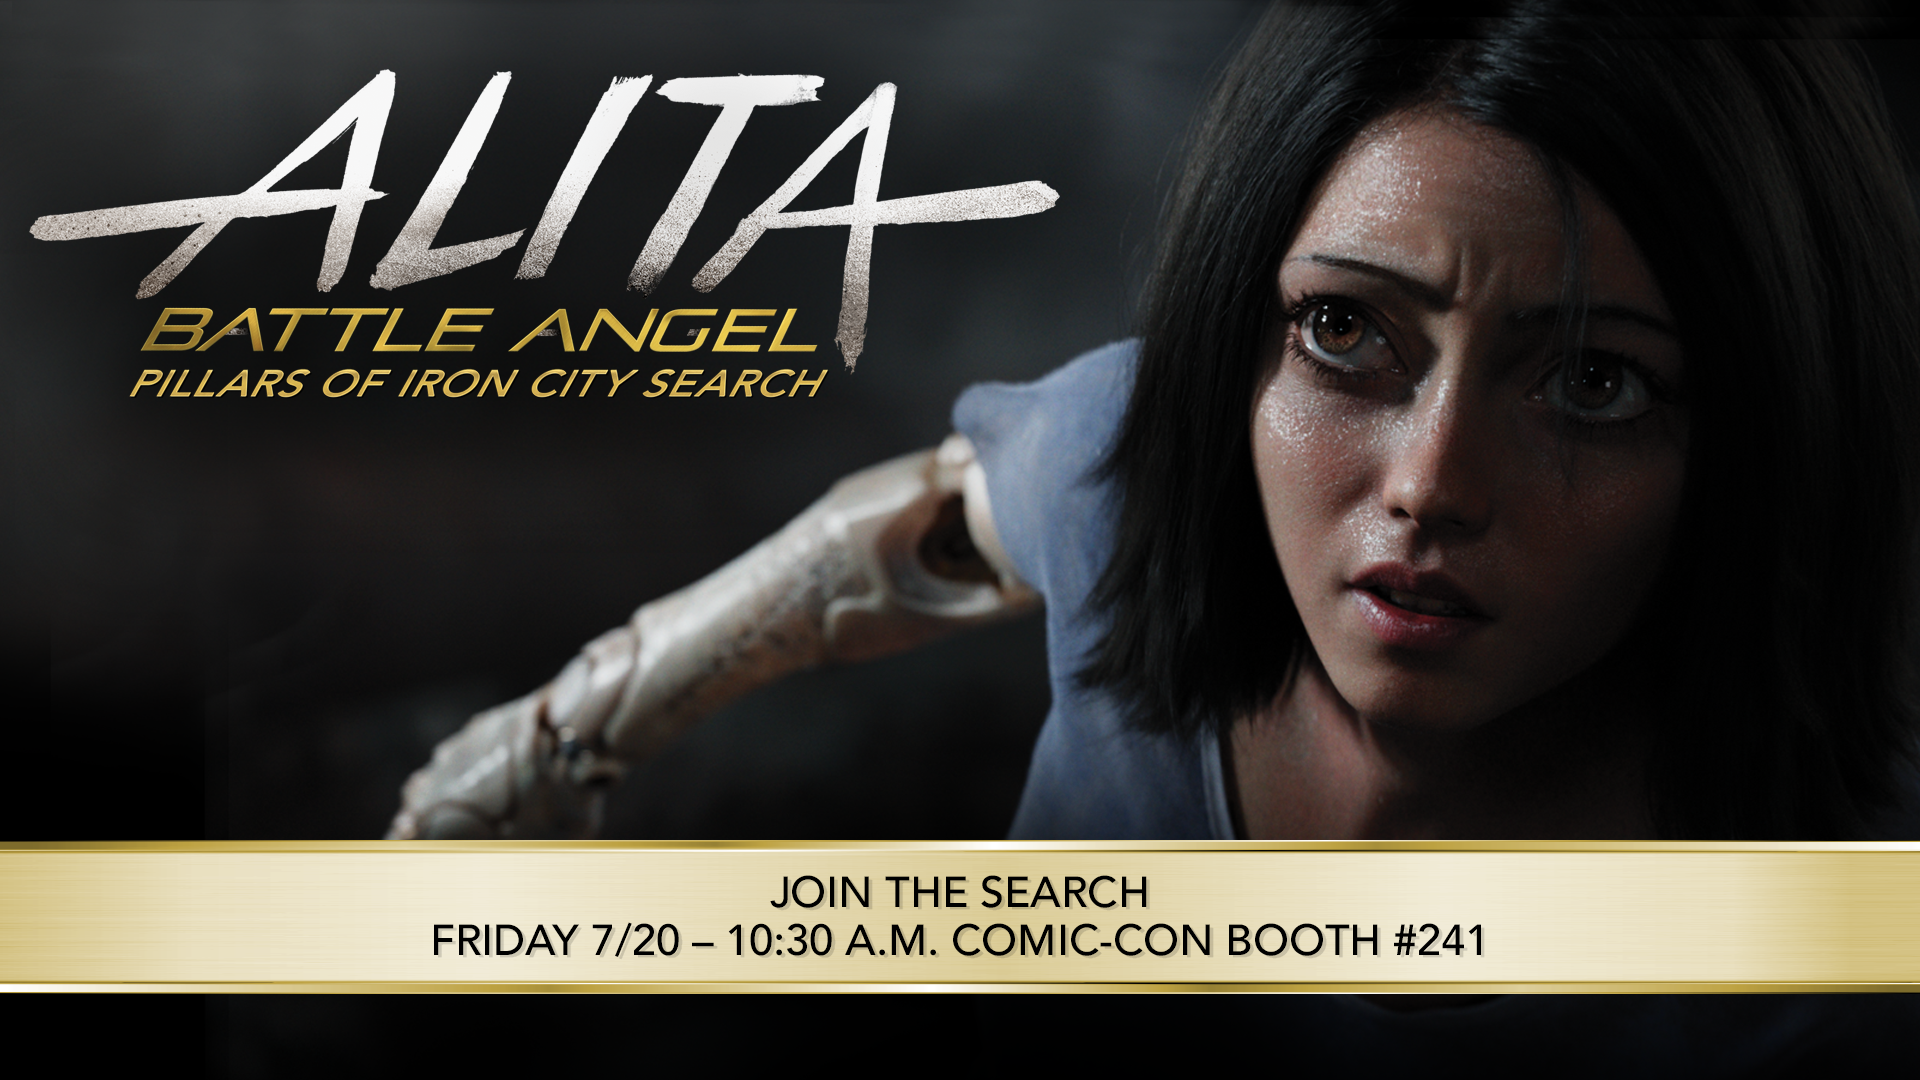 Alita: Battle Angel Pillars of Iron City Search at SDCC!